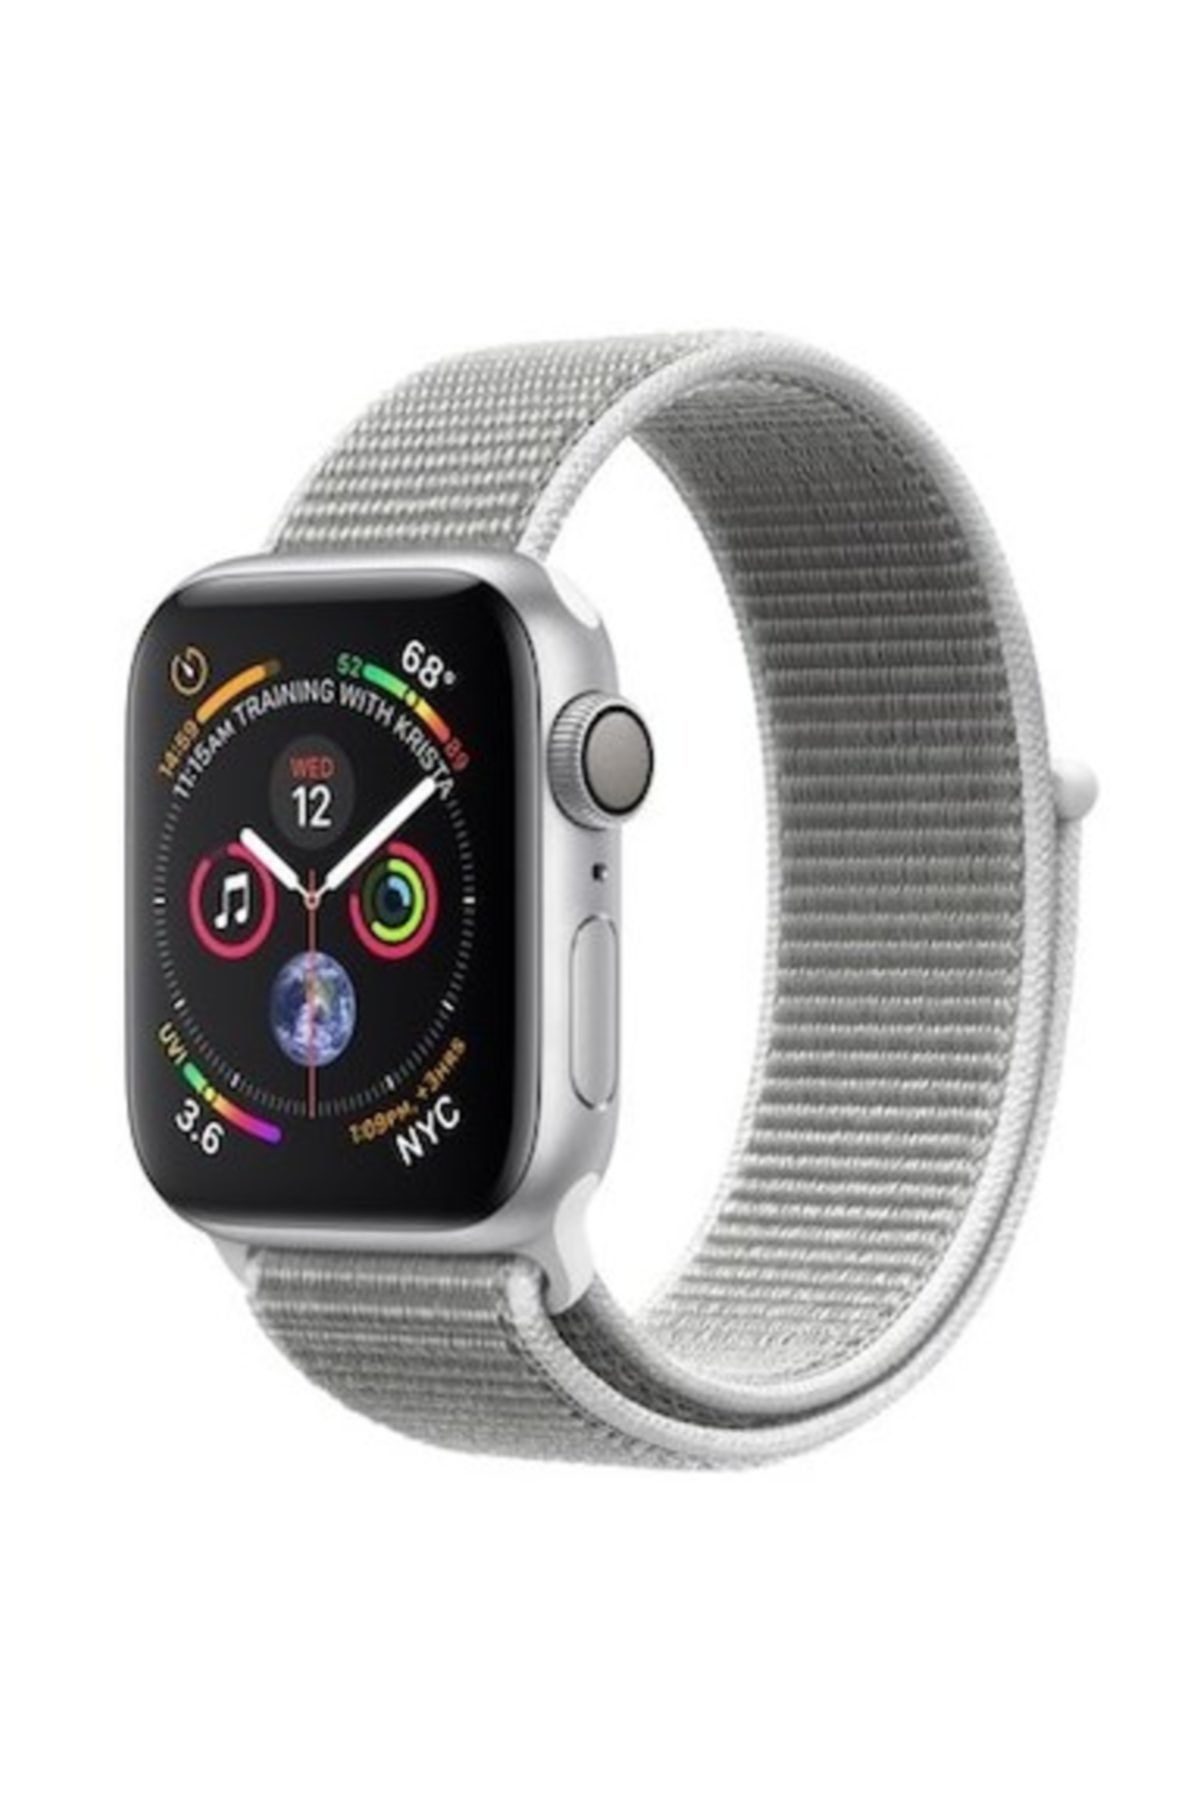 Apple Watch S4 Gps, 40mm Silver Aluminium With Seashell Mu652tu/a